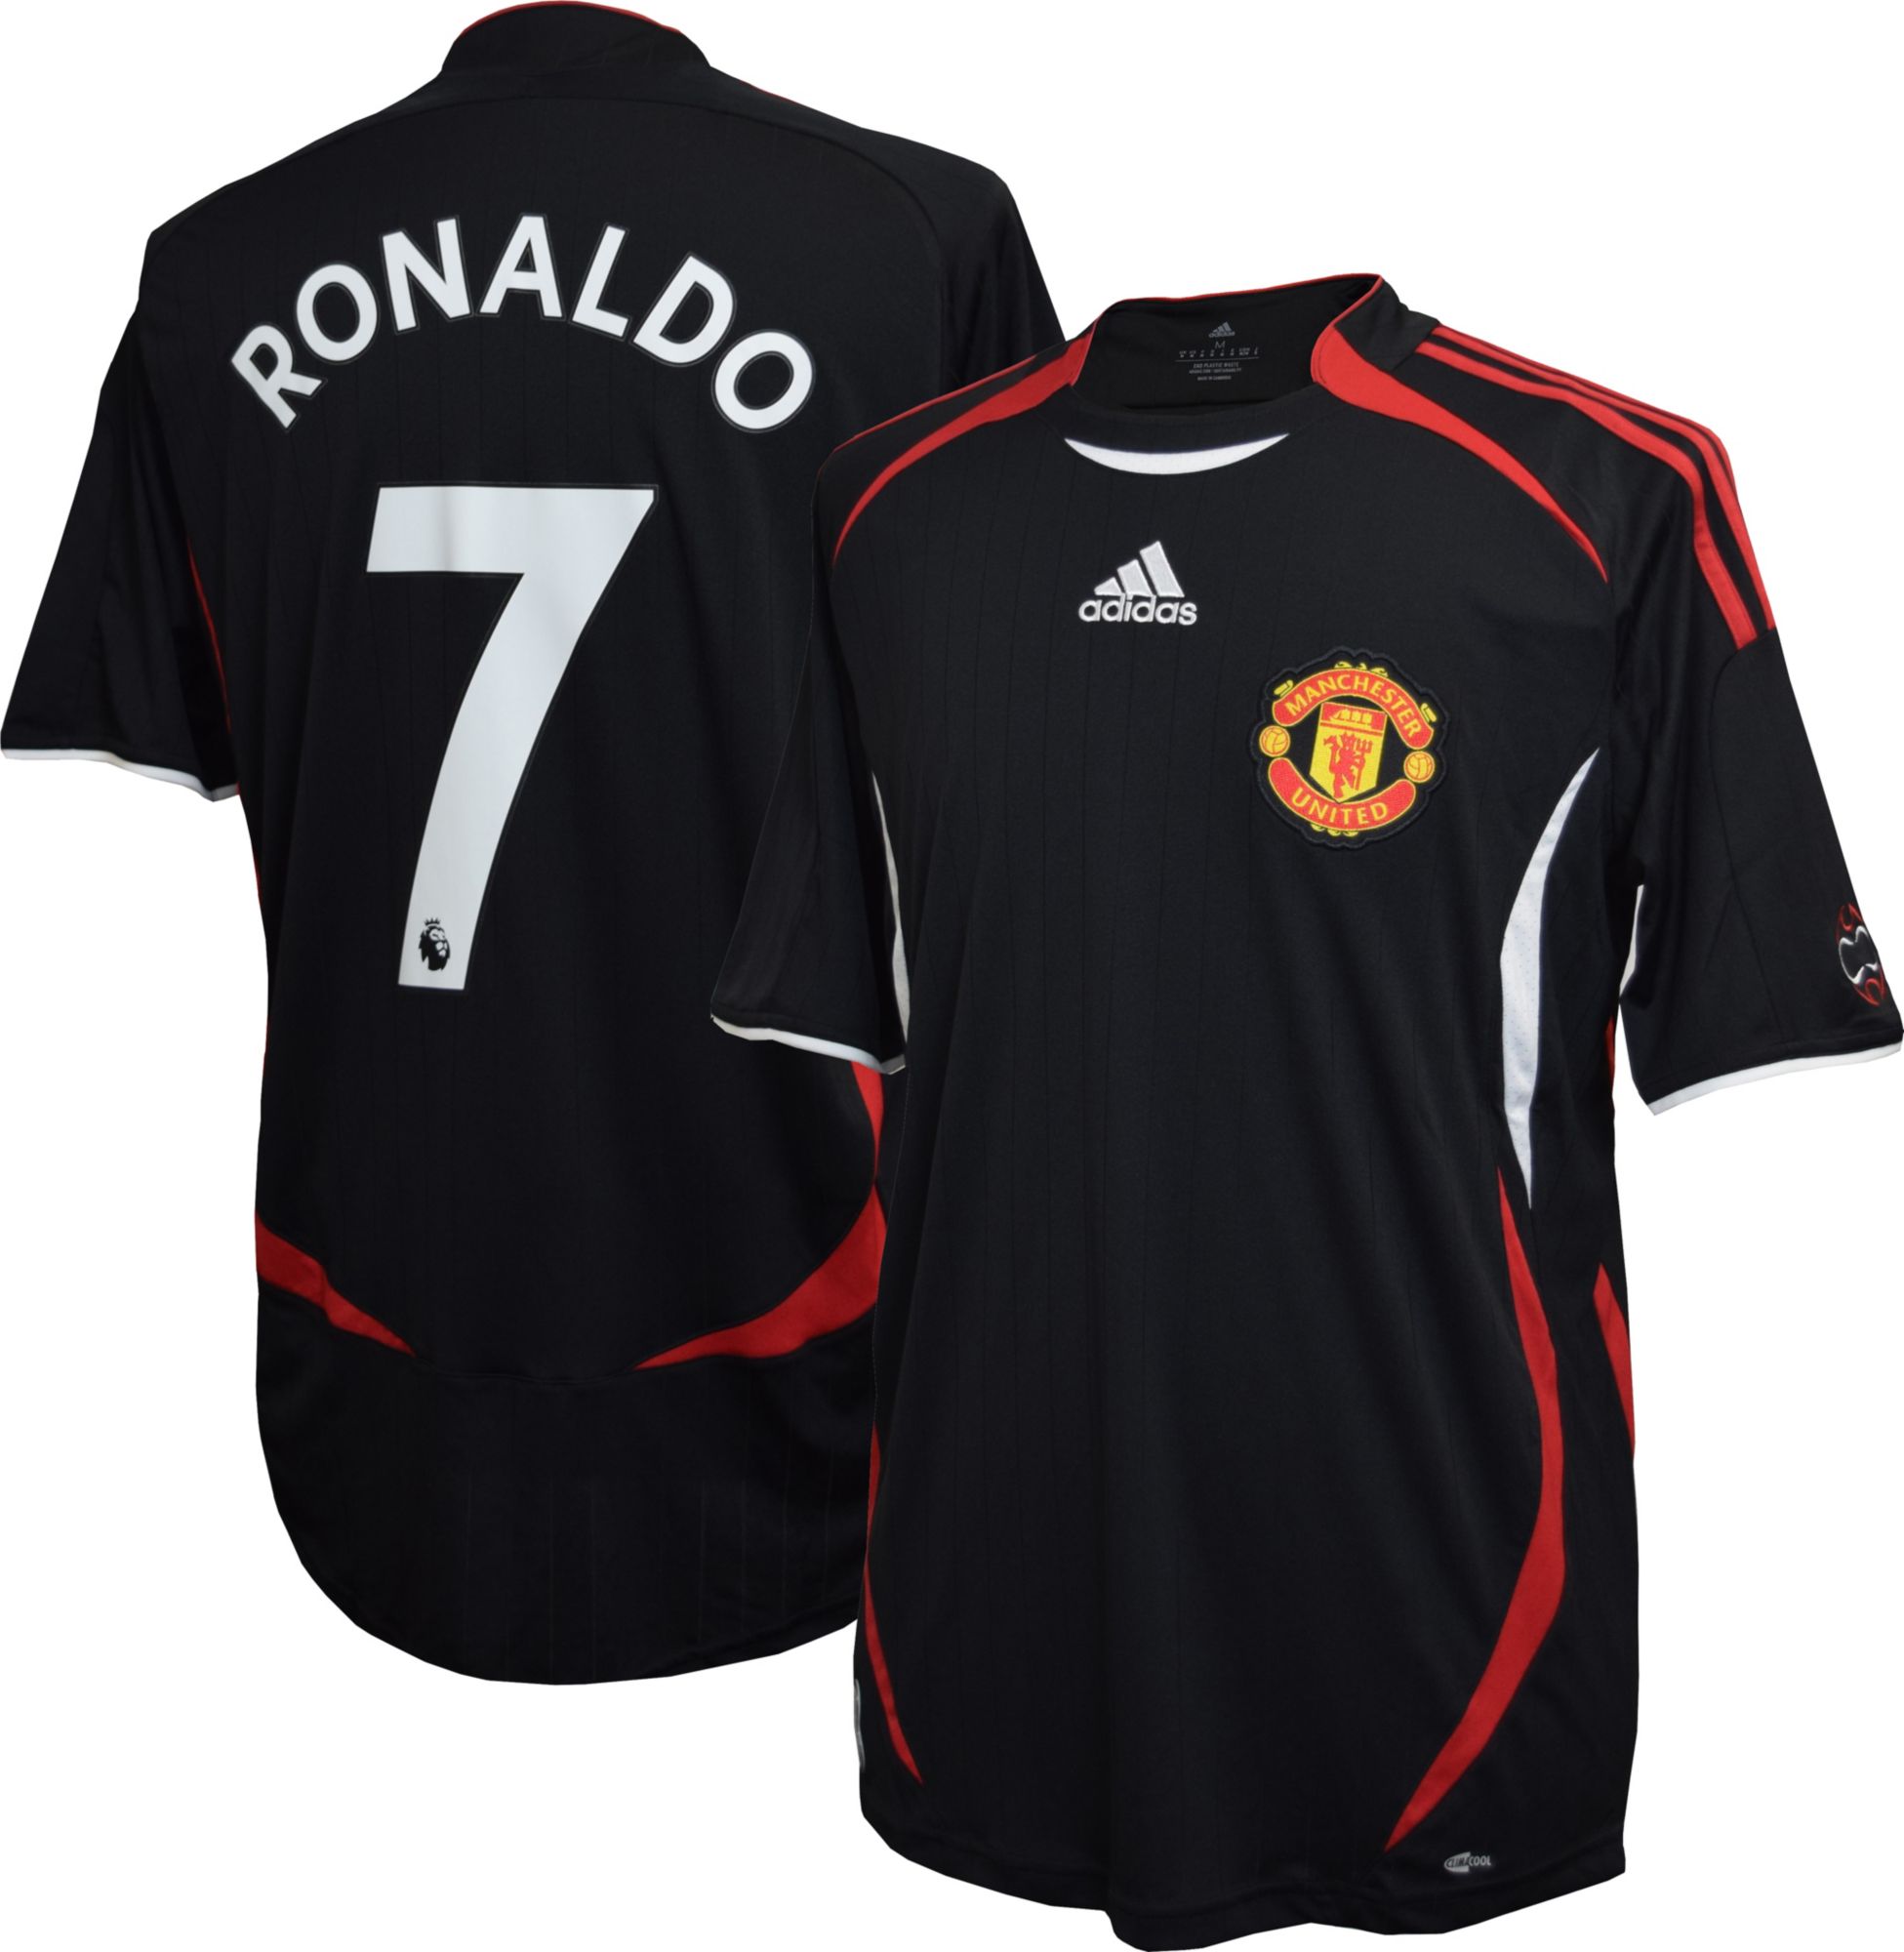 Adidas / Manchester United Cristiano Ronaldo #7 Teamgeist Jersey